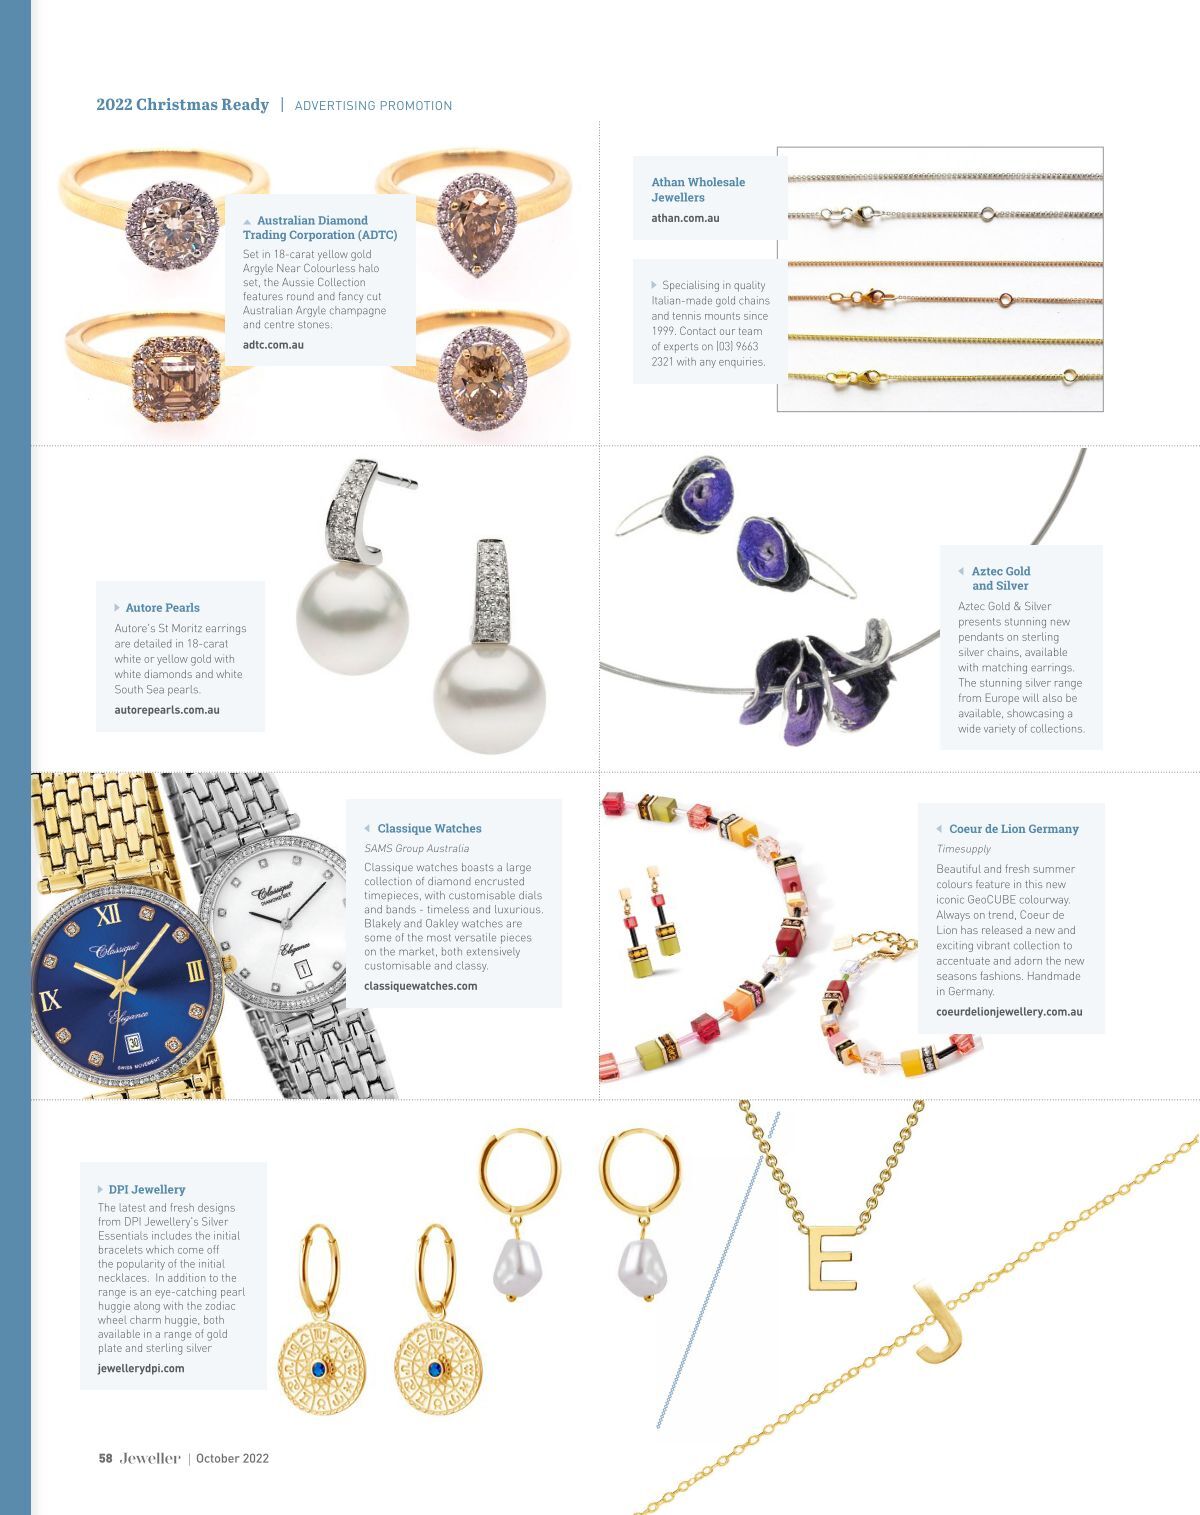 Autore Pearls - Jeweller Magazine: Jewellery News and Trends